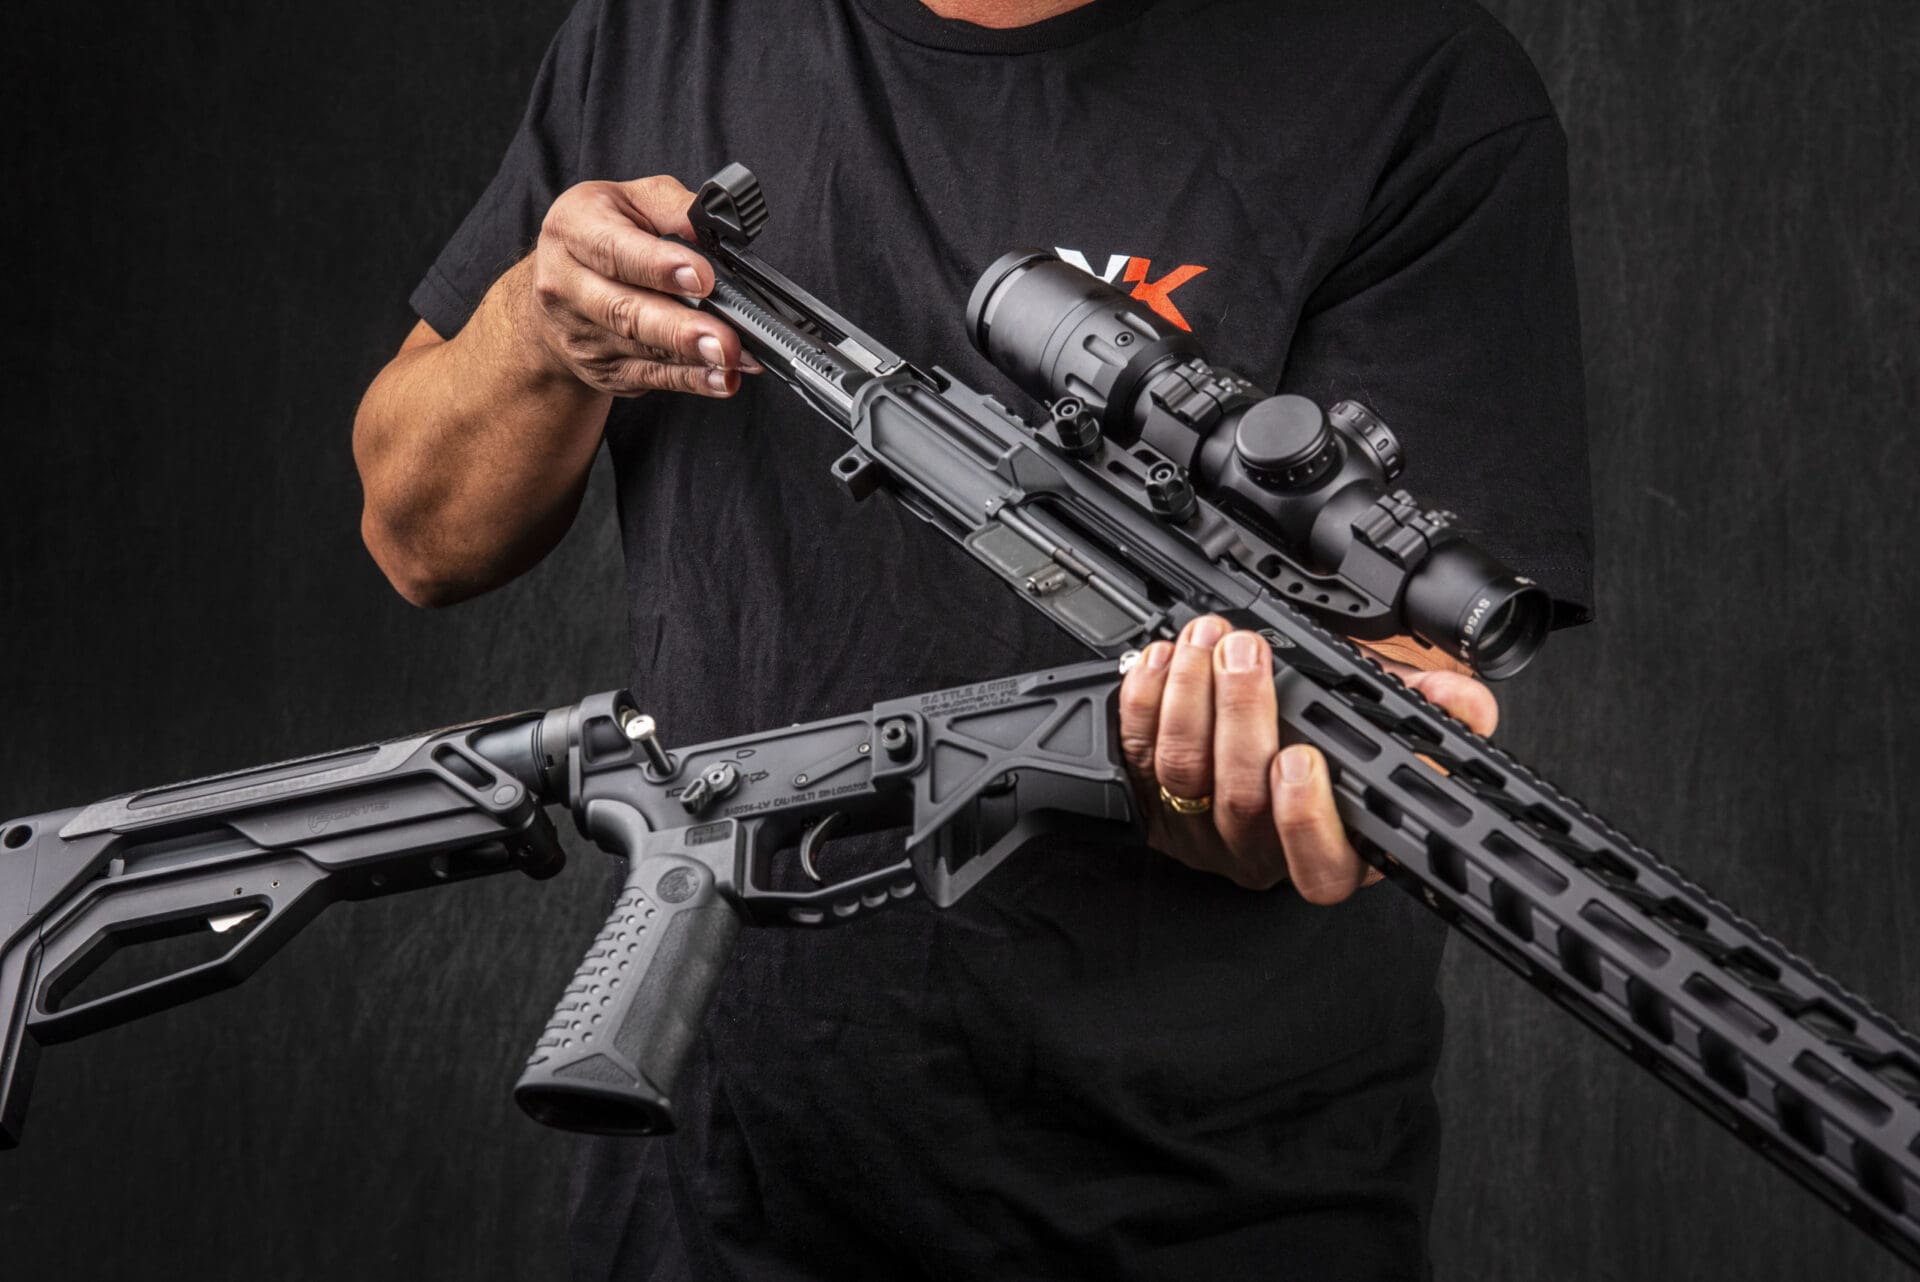 Kali Key bolt action ar-15 rifle california legal